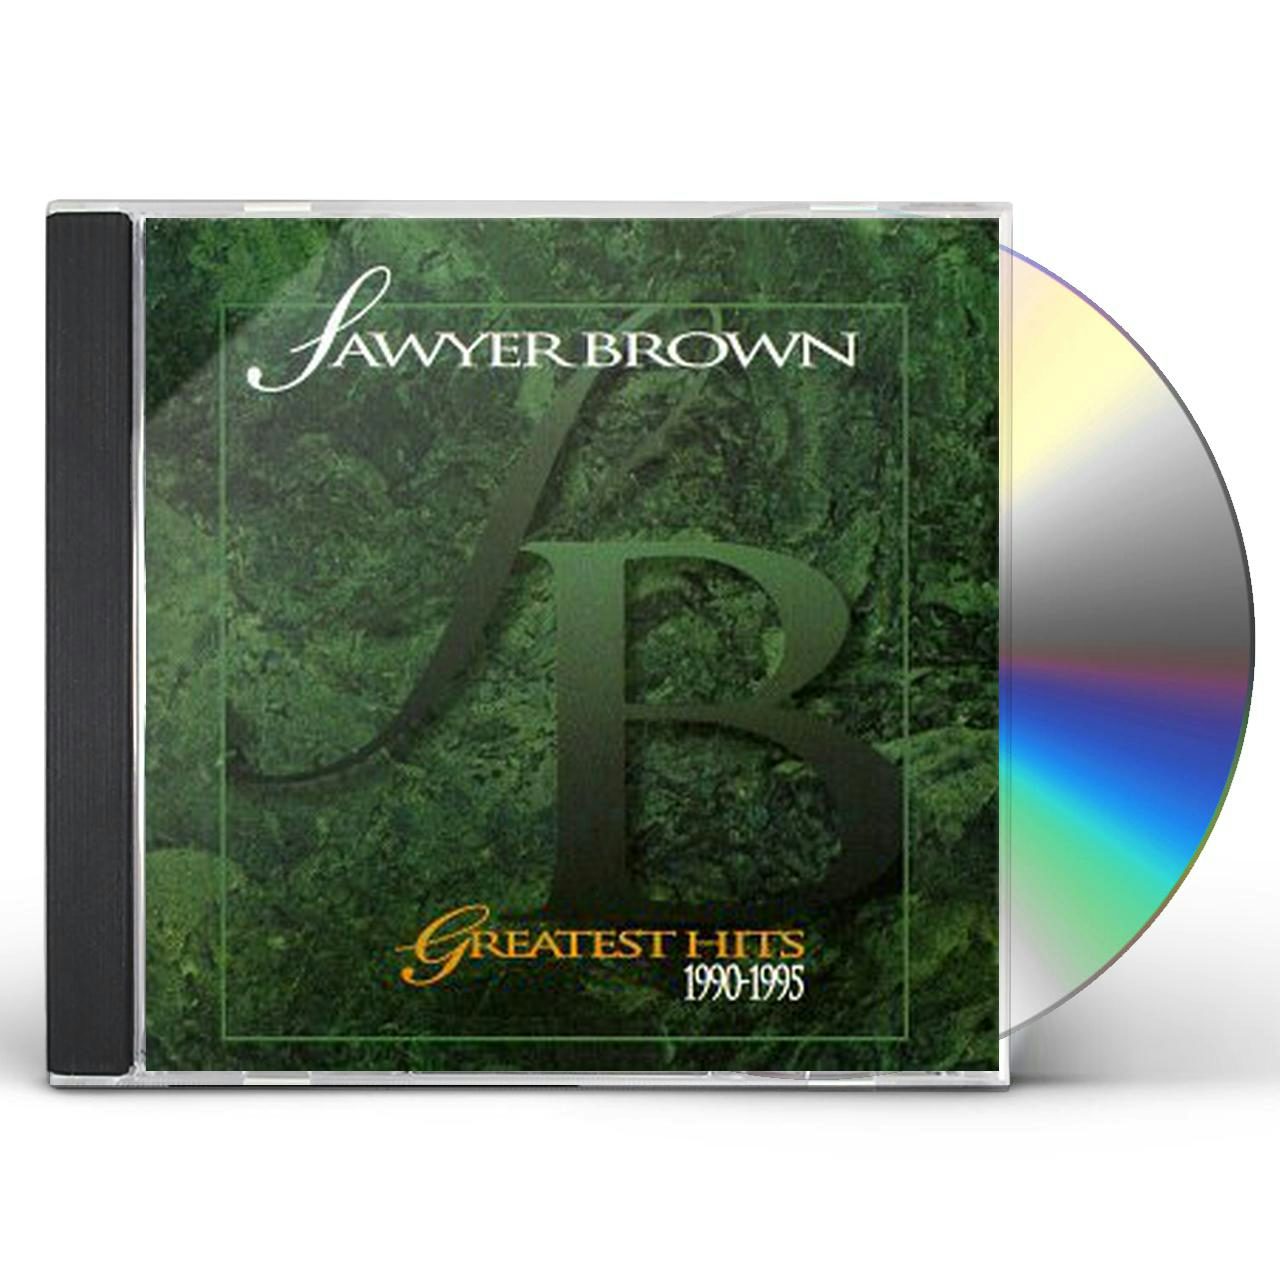 Sawyer Brown GREATEST HITS 1990-1995 CD